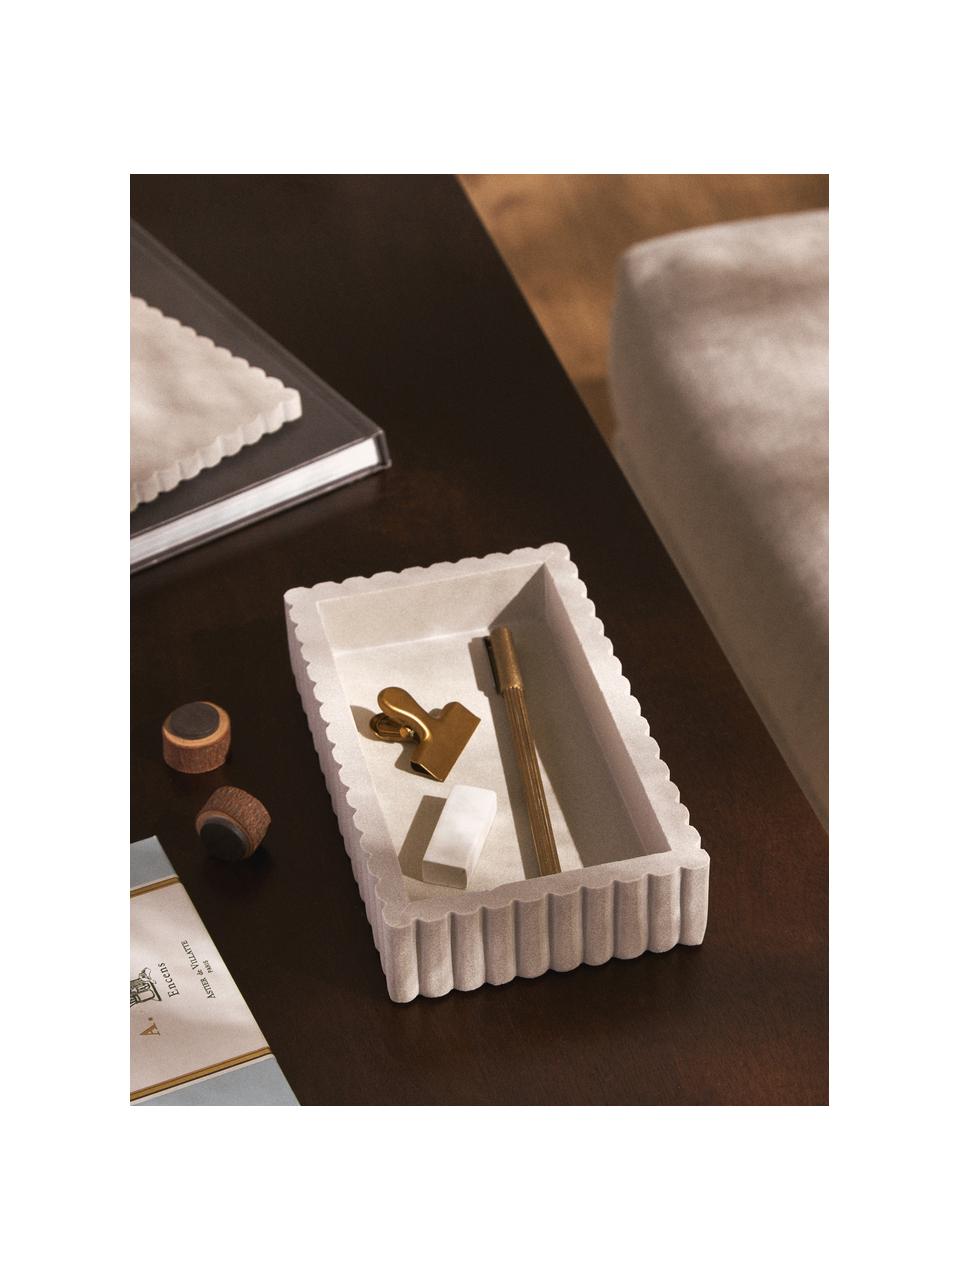 Skladovací box s žebrovaným okrajem Rita, Pískovec, Tlumeně bílá, Š 20 cm, H 12 cm